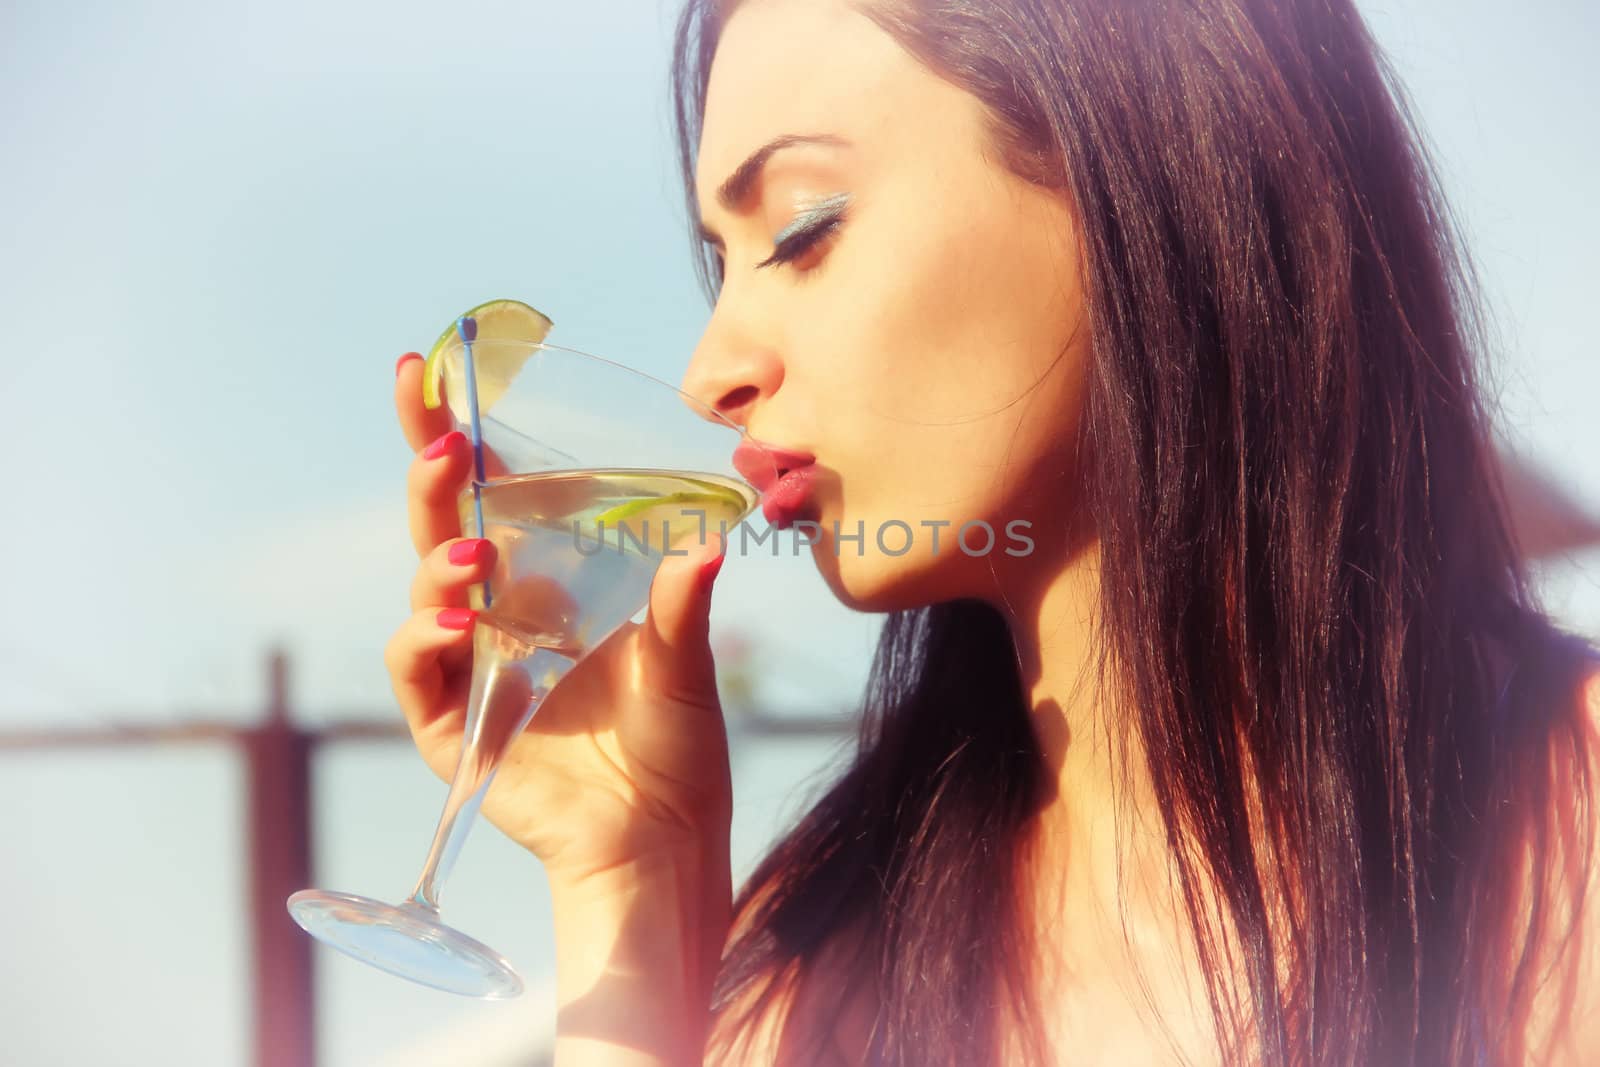 Attractive young girl drinking martini by levonarakelian